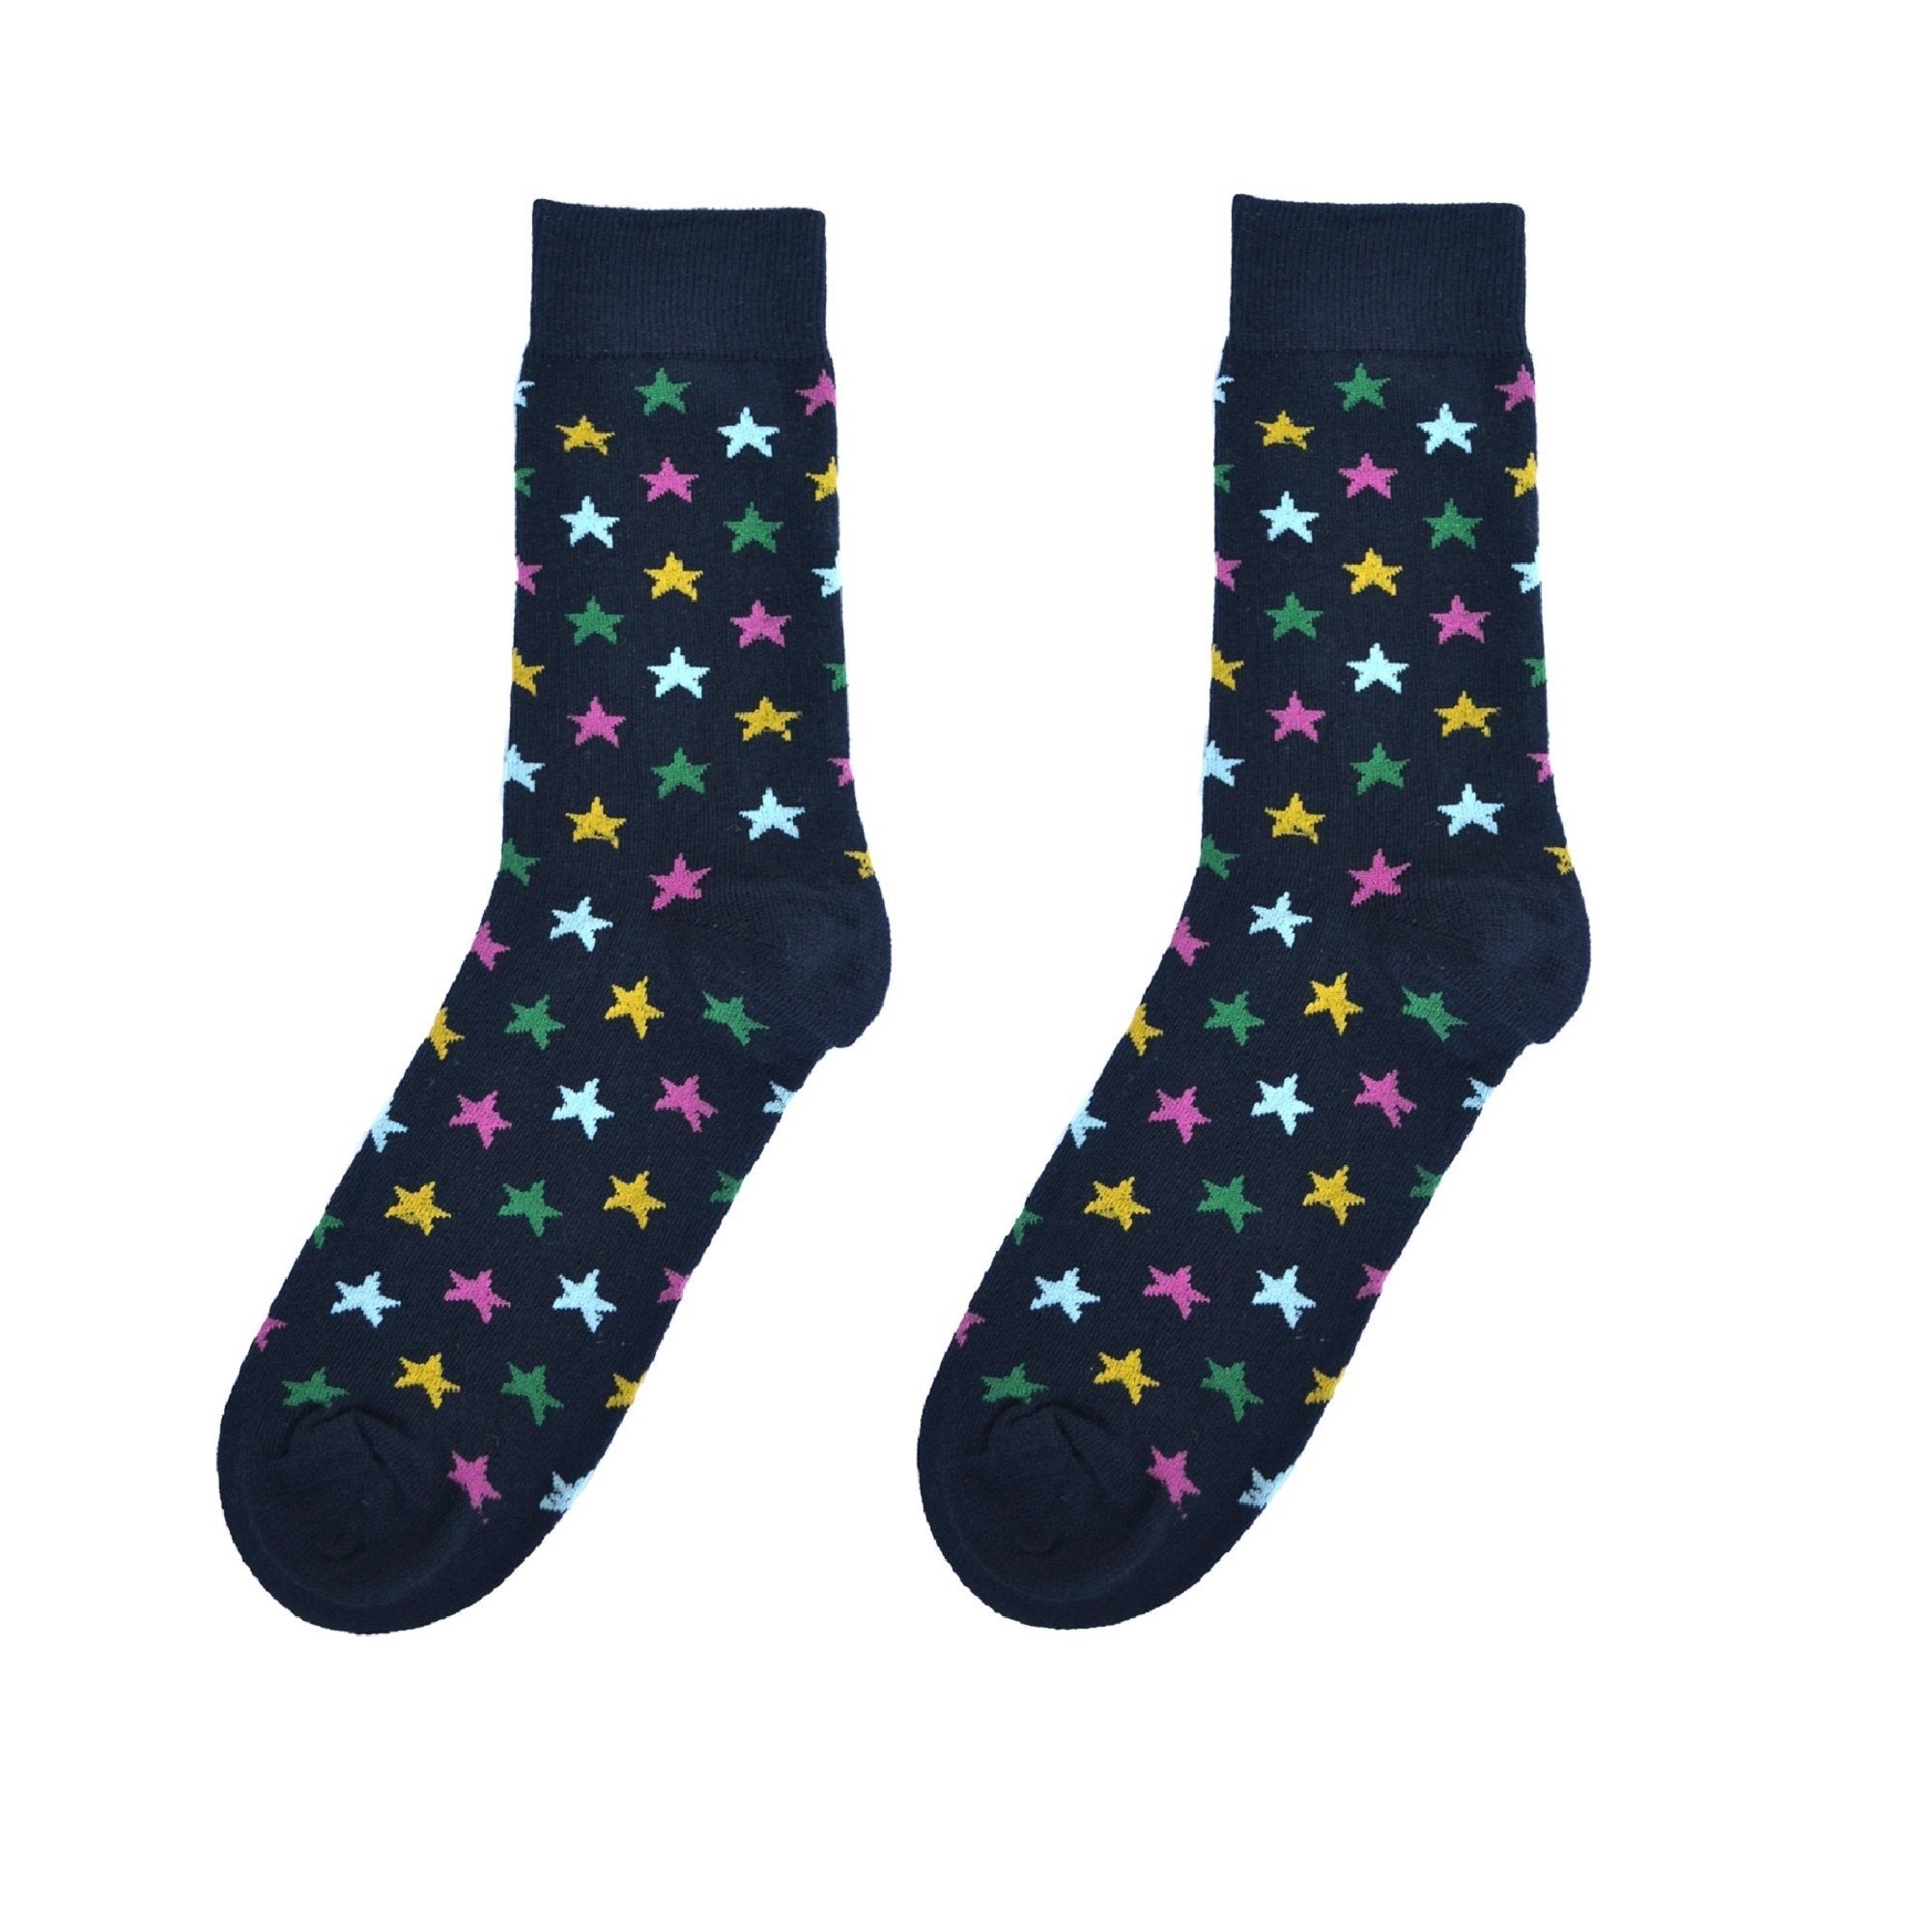 Nordström sok - Organic socks of Sweden